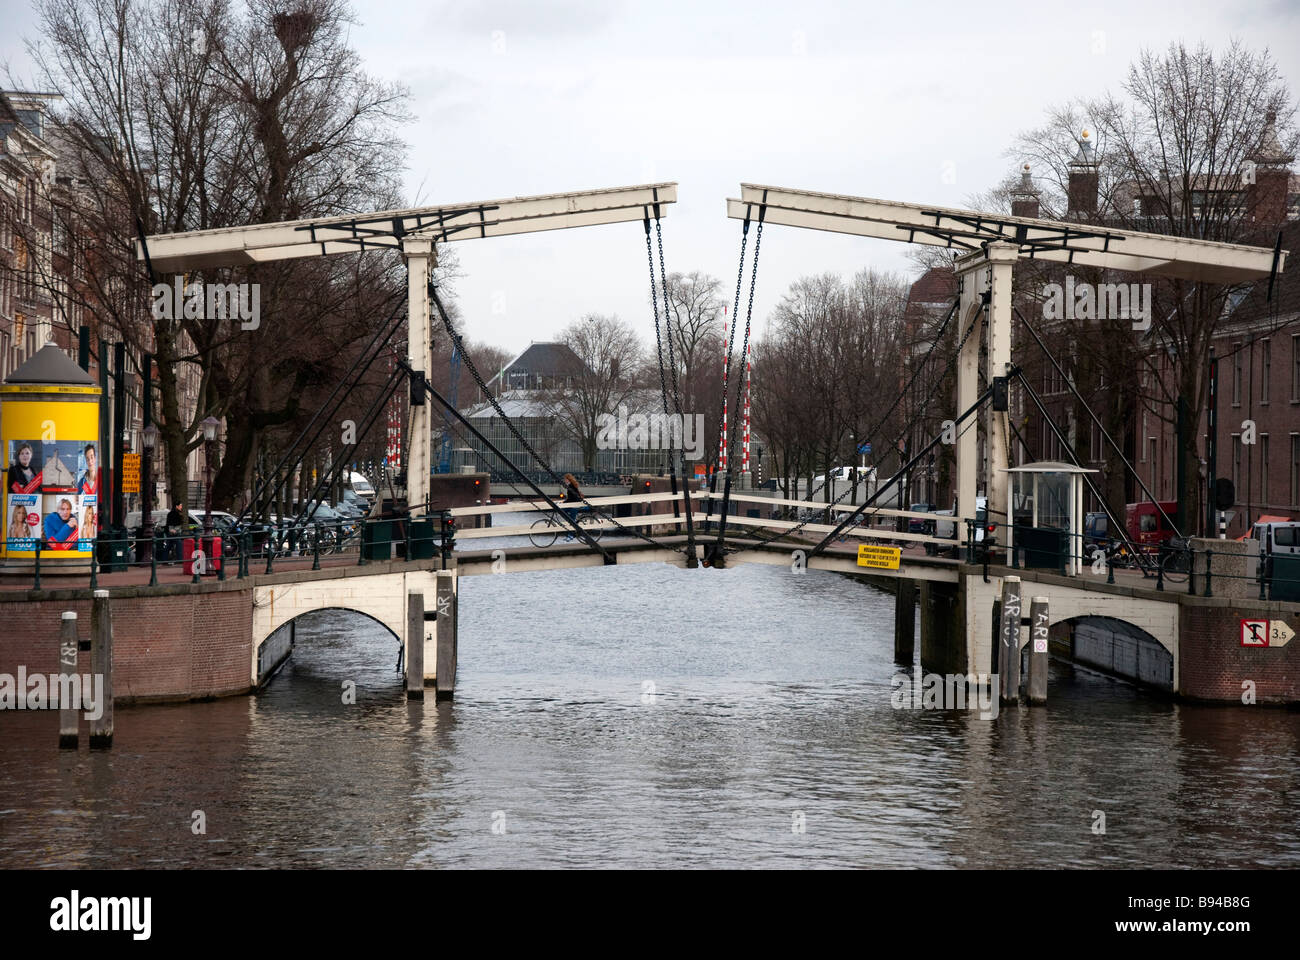 Doble hoja puente levadizo típico holandés Amsterdam Foto de stock